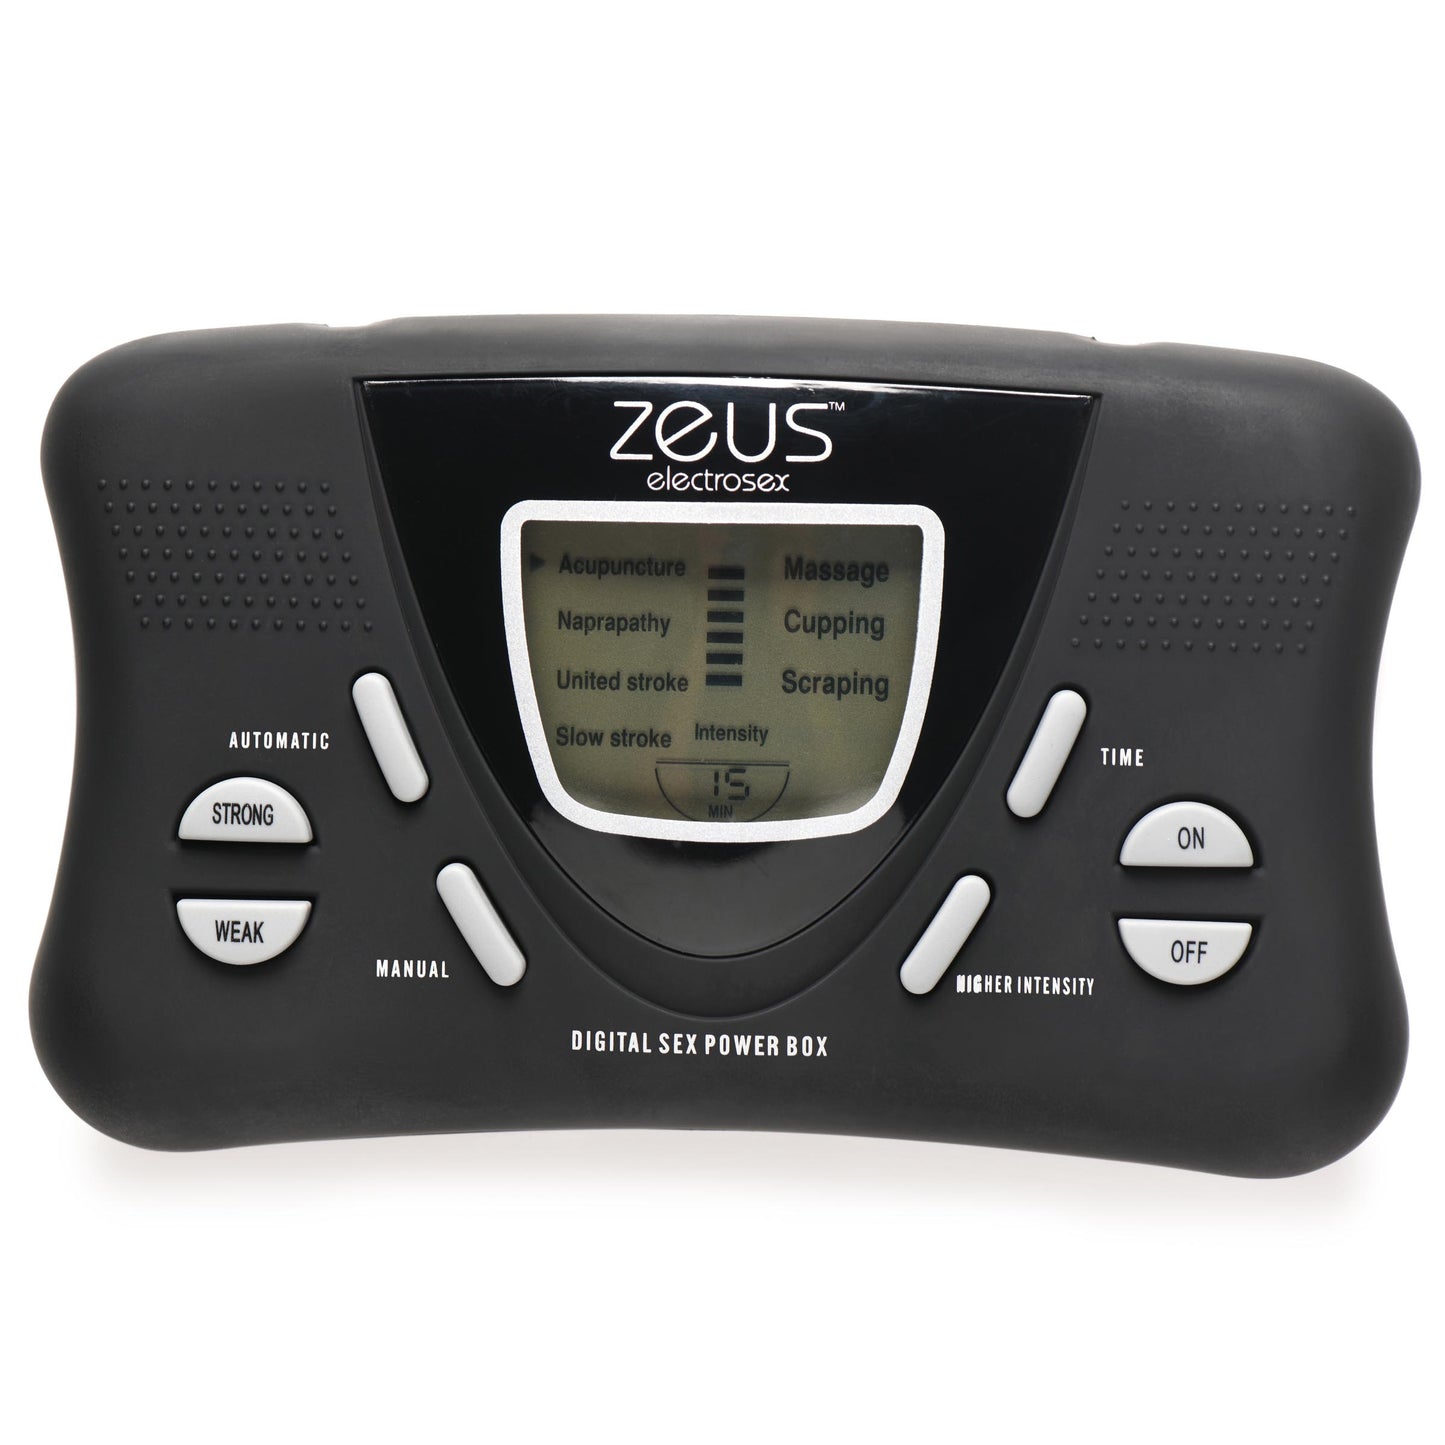 Zeus Deluxe E-Stim Kit